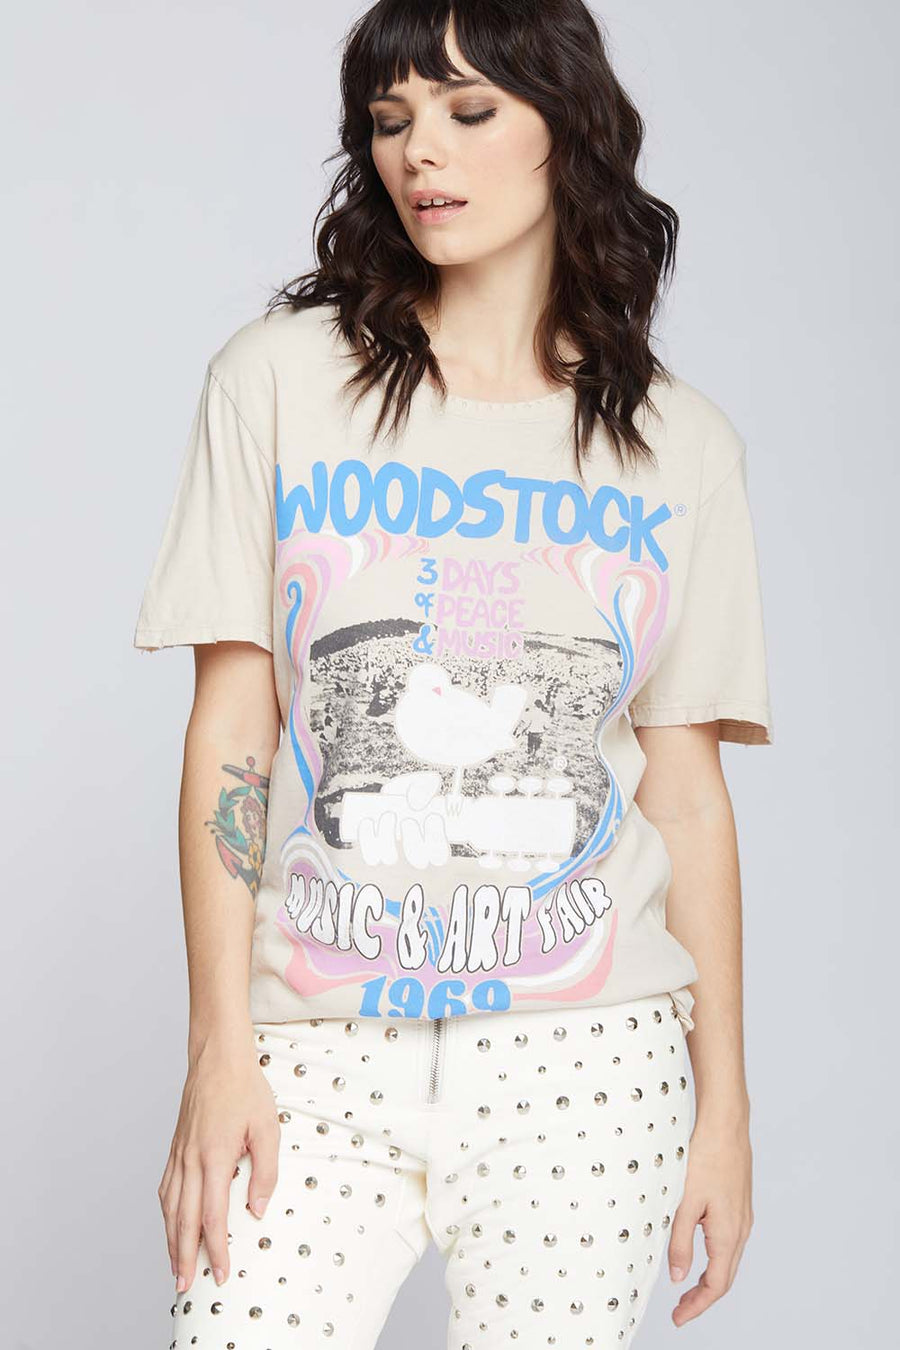 Woodstock Music & Art Fair 1969 T-shirt 301992 Old-Lace